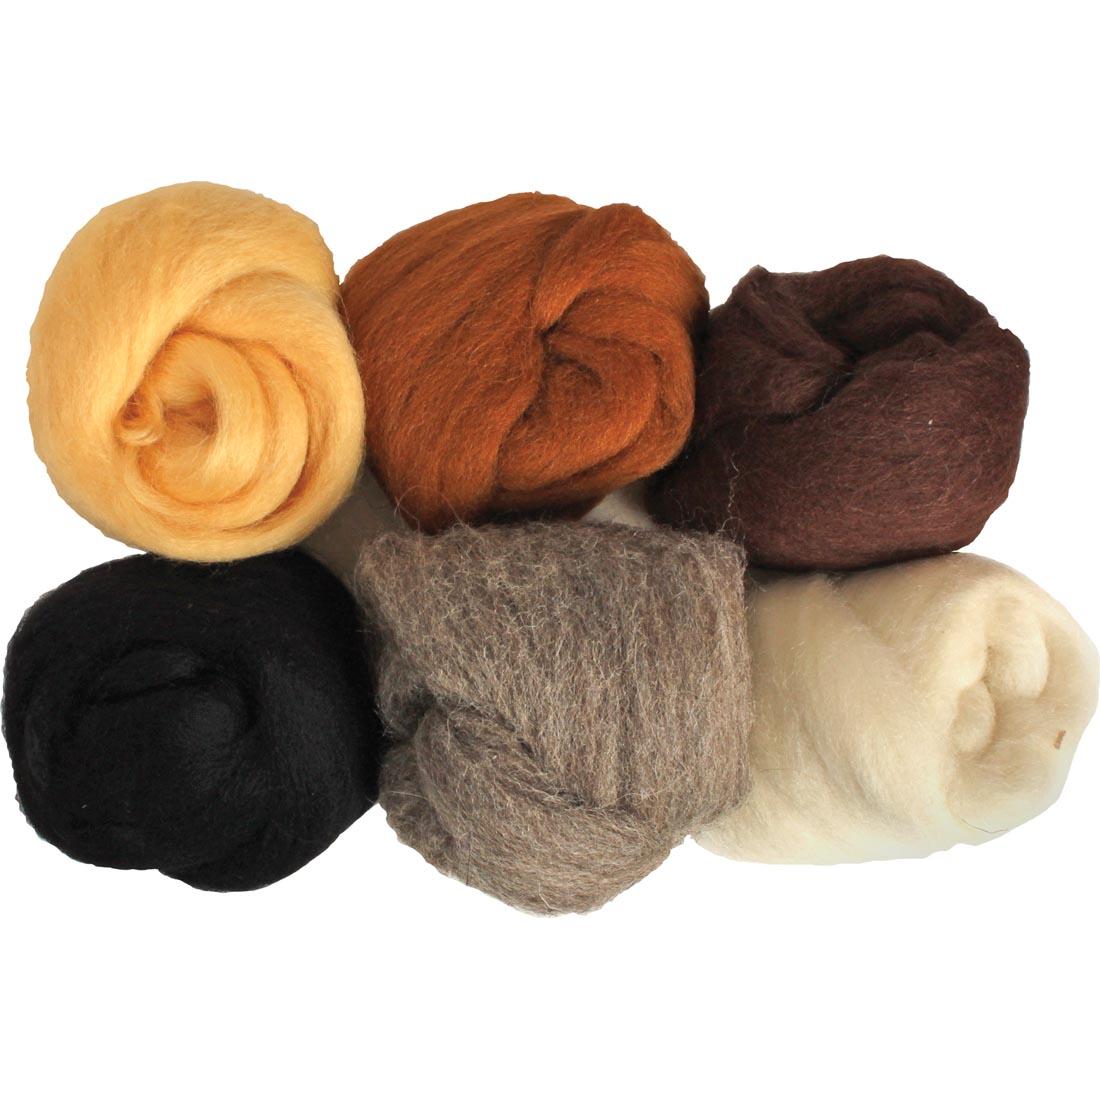 Six Different Colors of Craft Wool Fibers